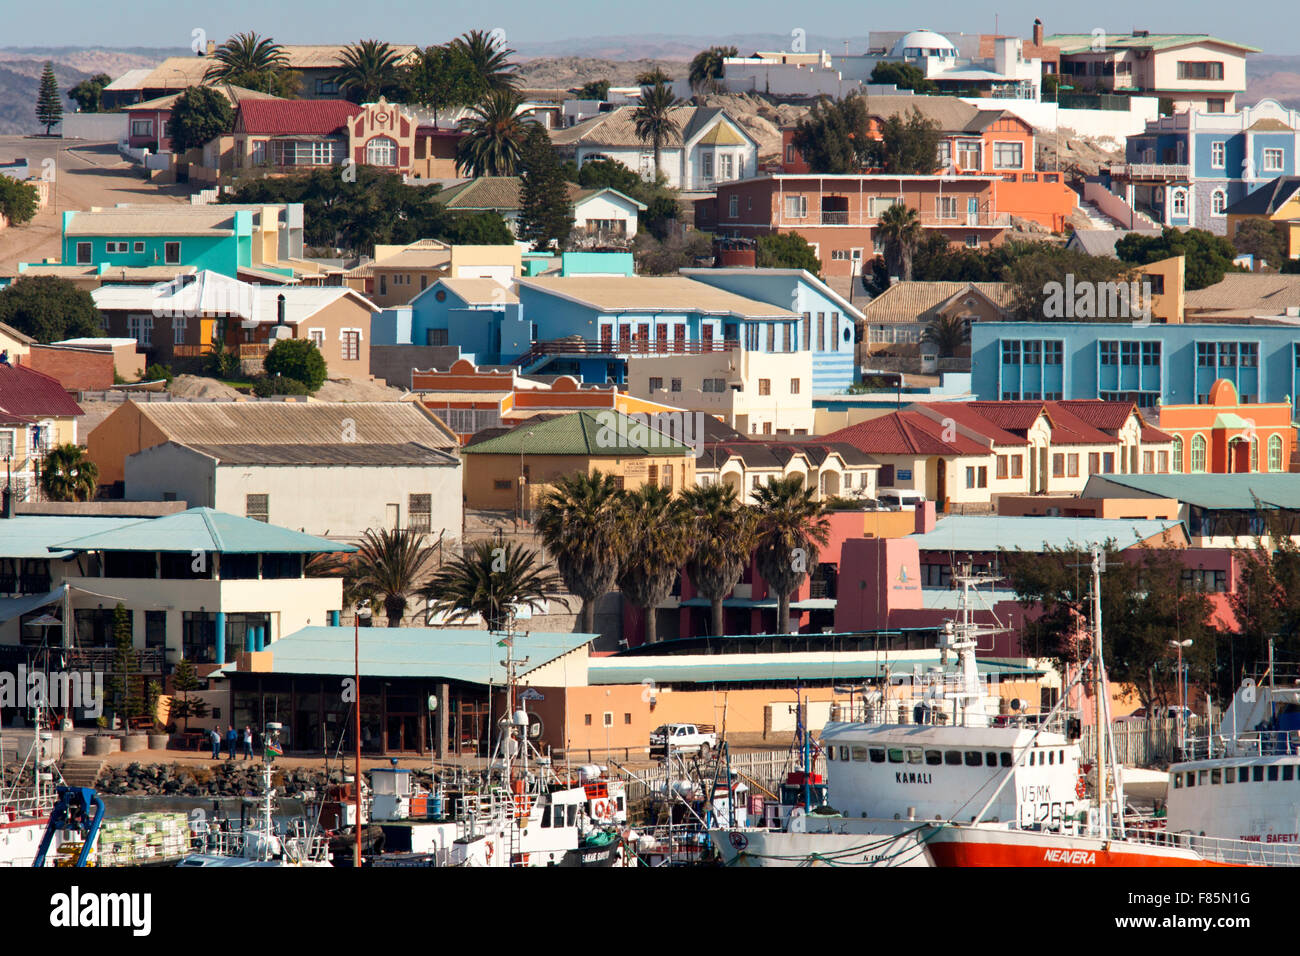 Town of Luderitz, Namibia, Africa Stock Photo